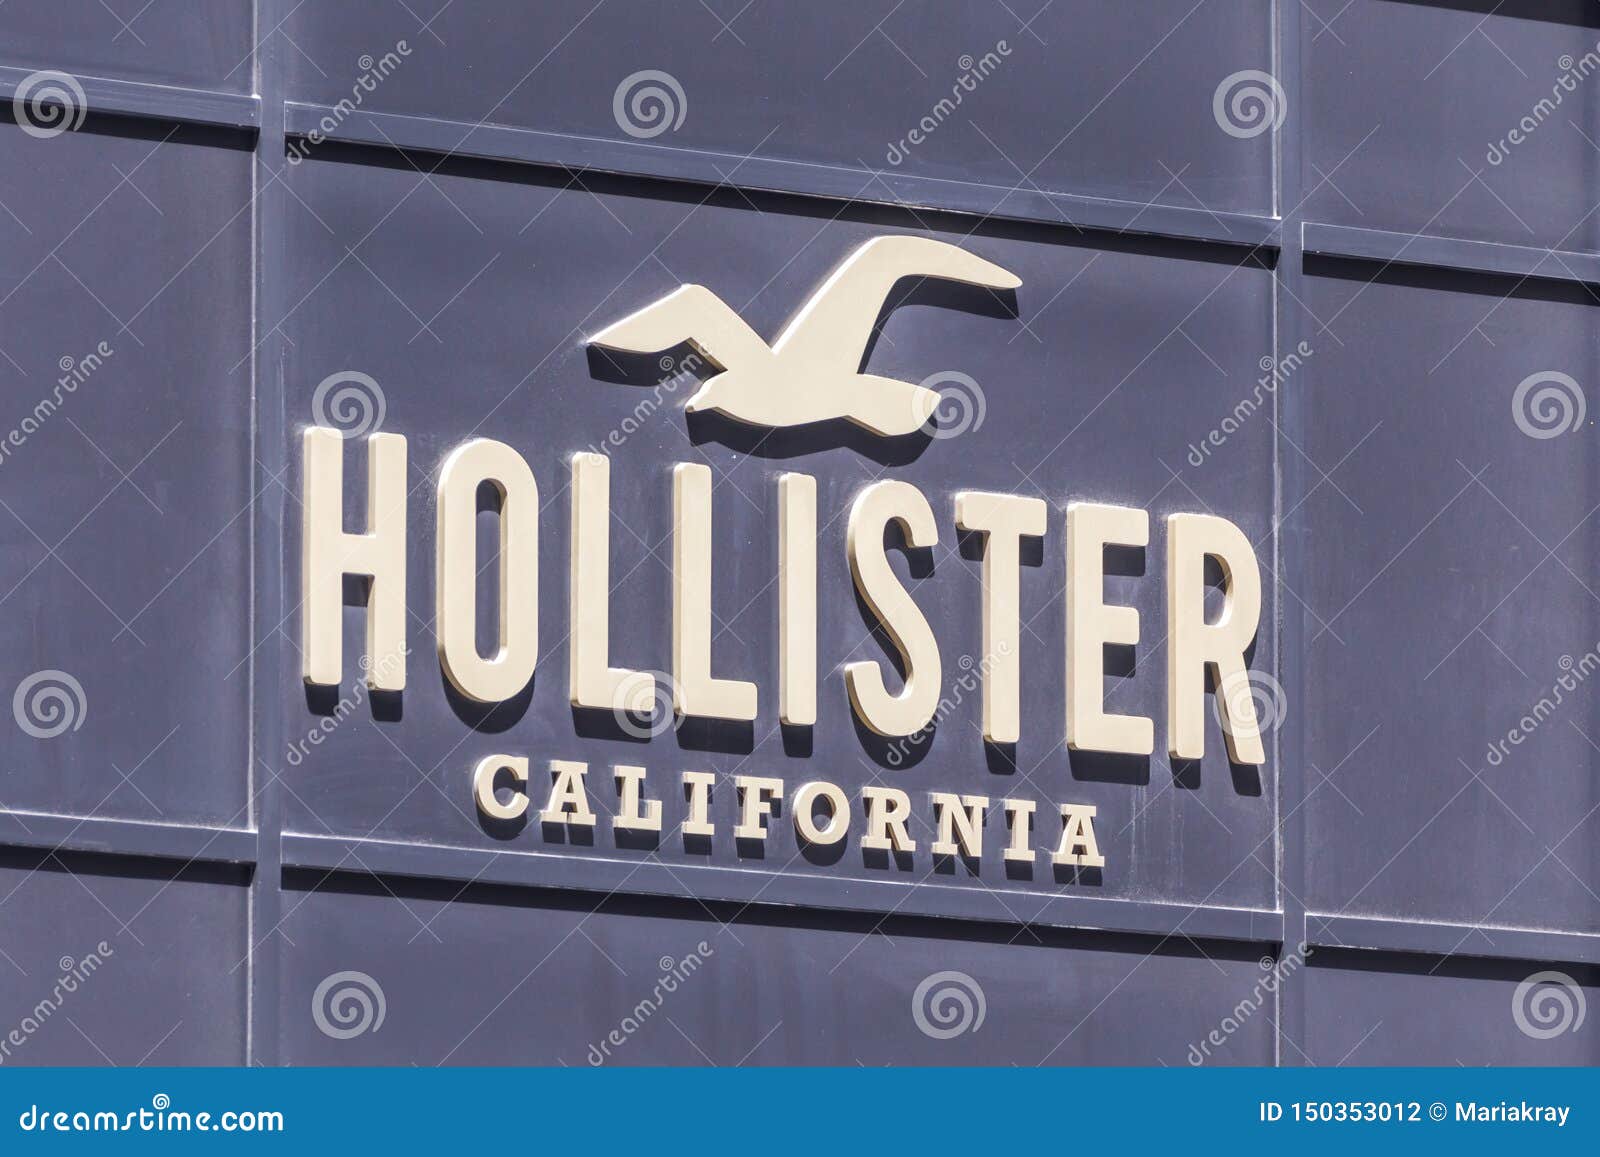 Clothes Brand Hollister California 